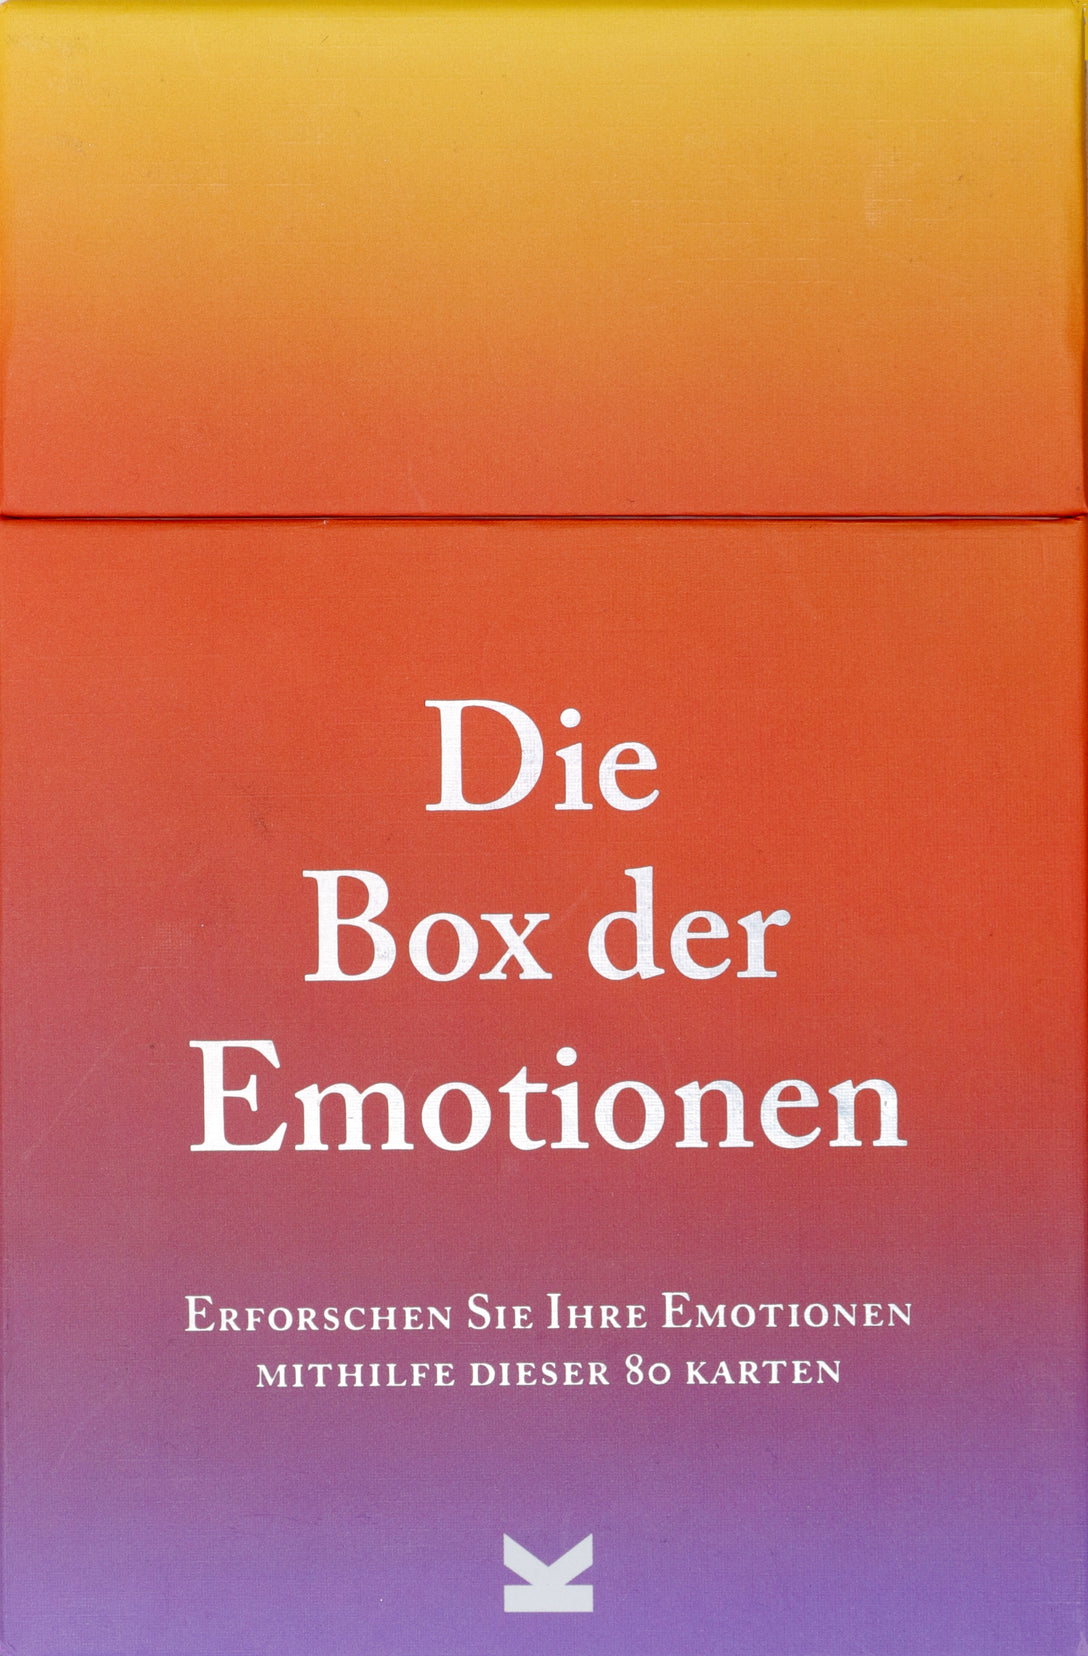 Die Box der Emotionen by Therese Vandling, Tiffany Watt Smith, Frederik Kugler